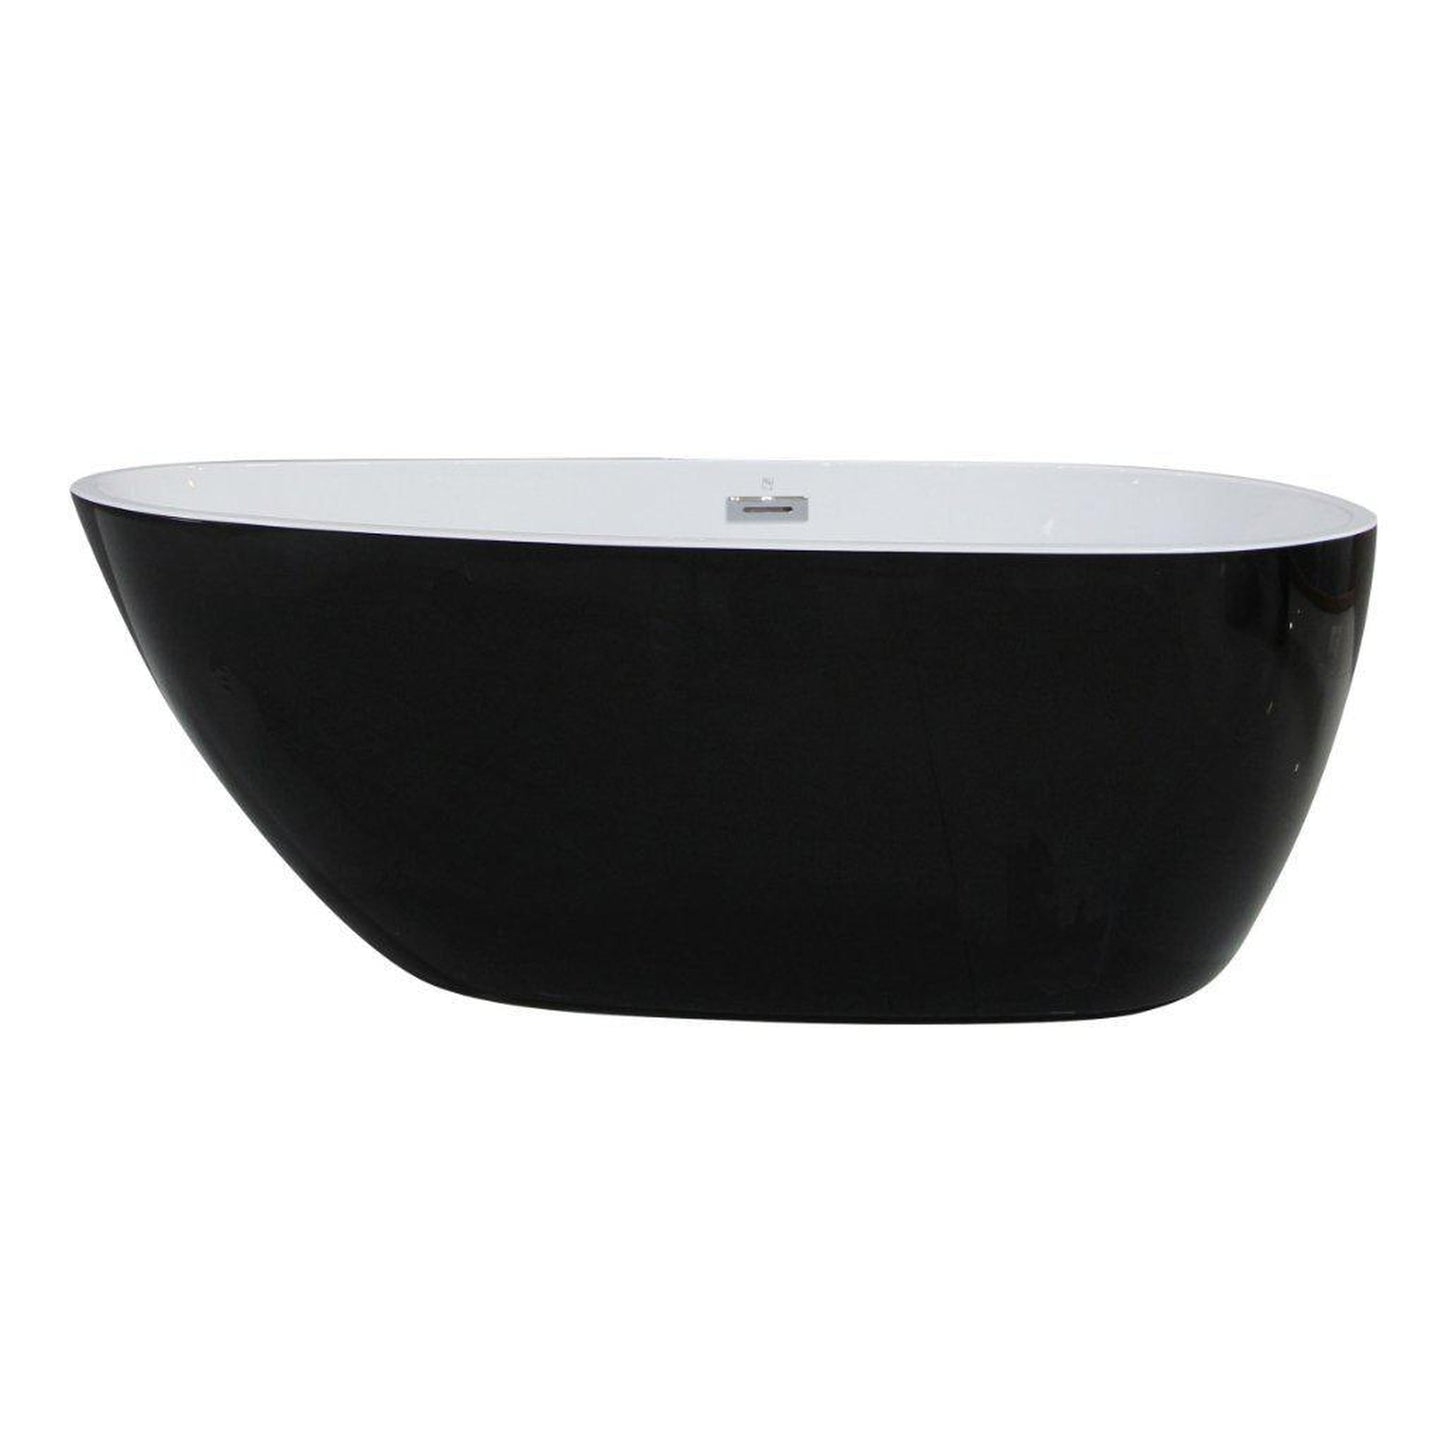 ALFI Brand AB8862 59" One Person Freestanding Black and White Oval Acrylic Soaking Bathtub